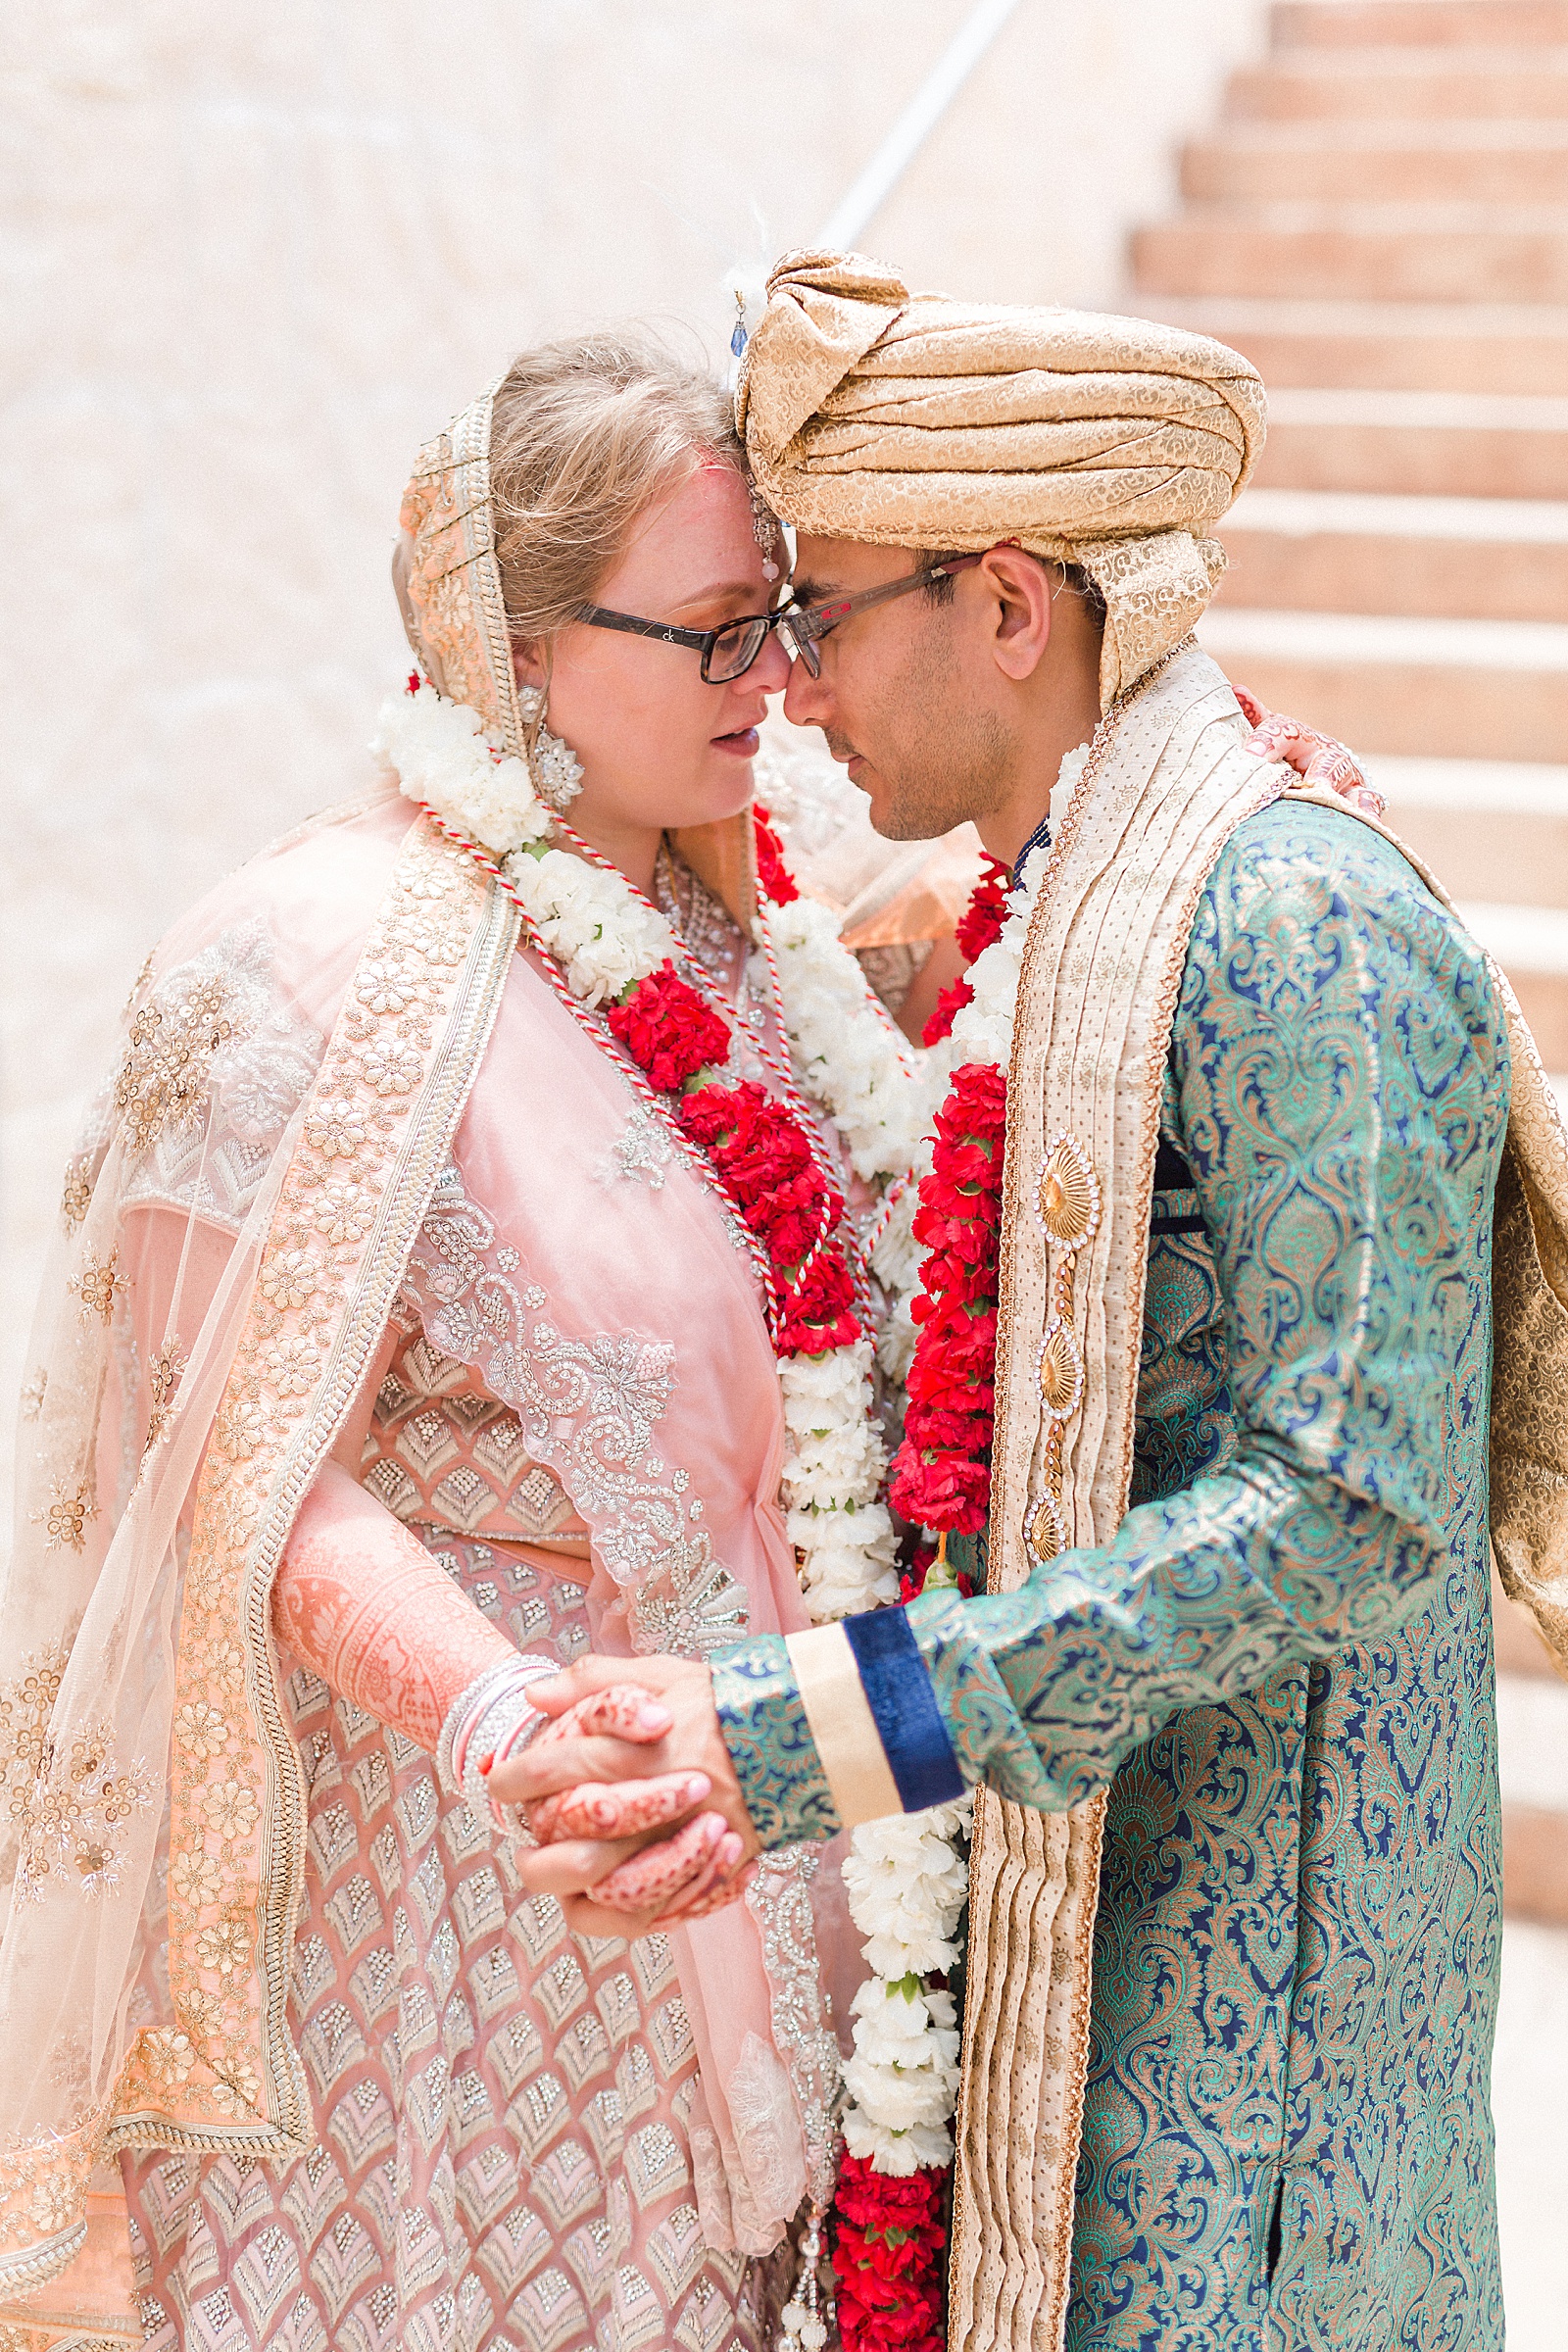 Bride and Groom dancing in Indian ceremony apparel